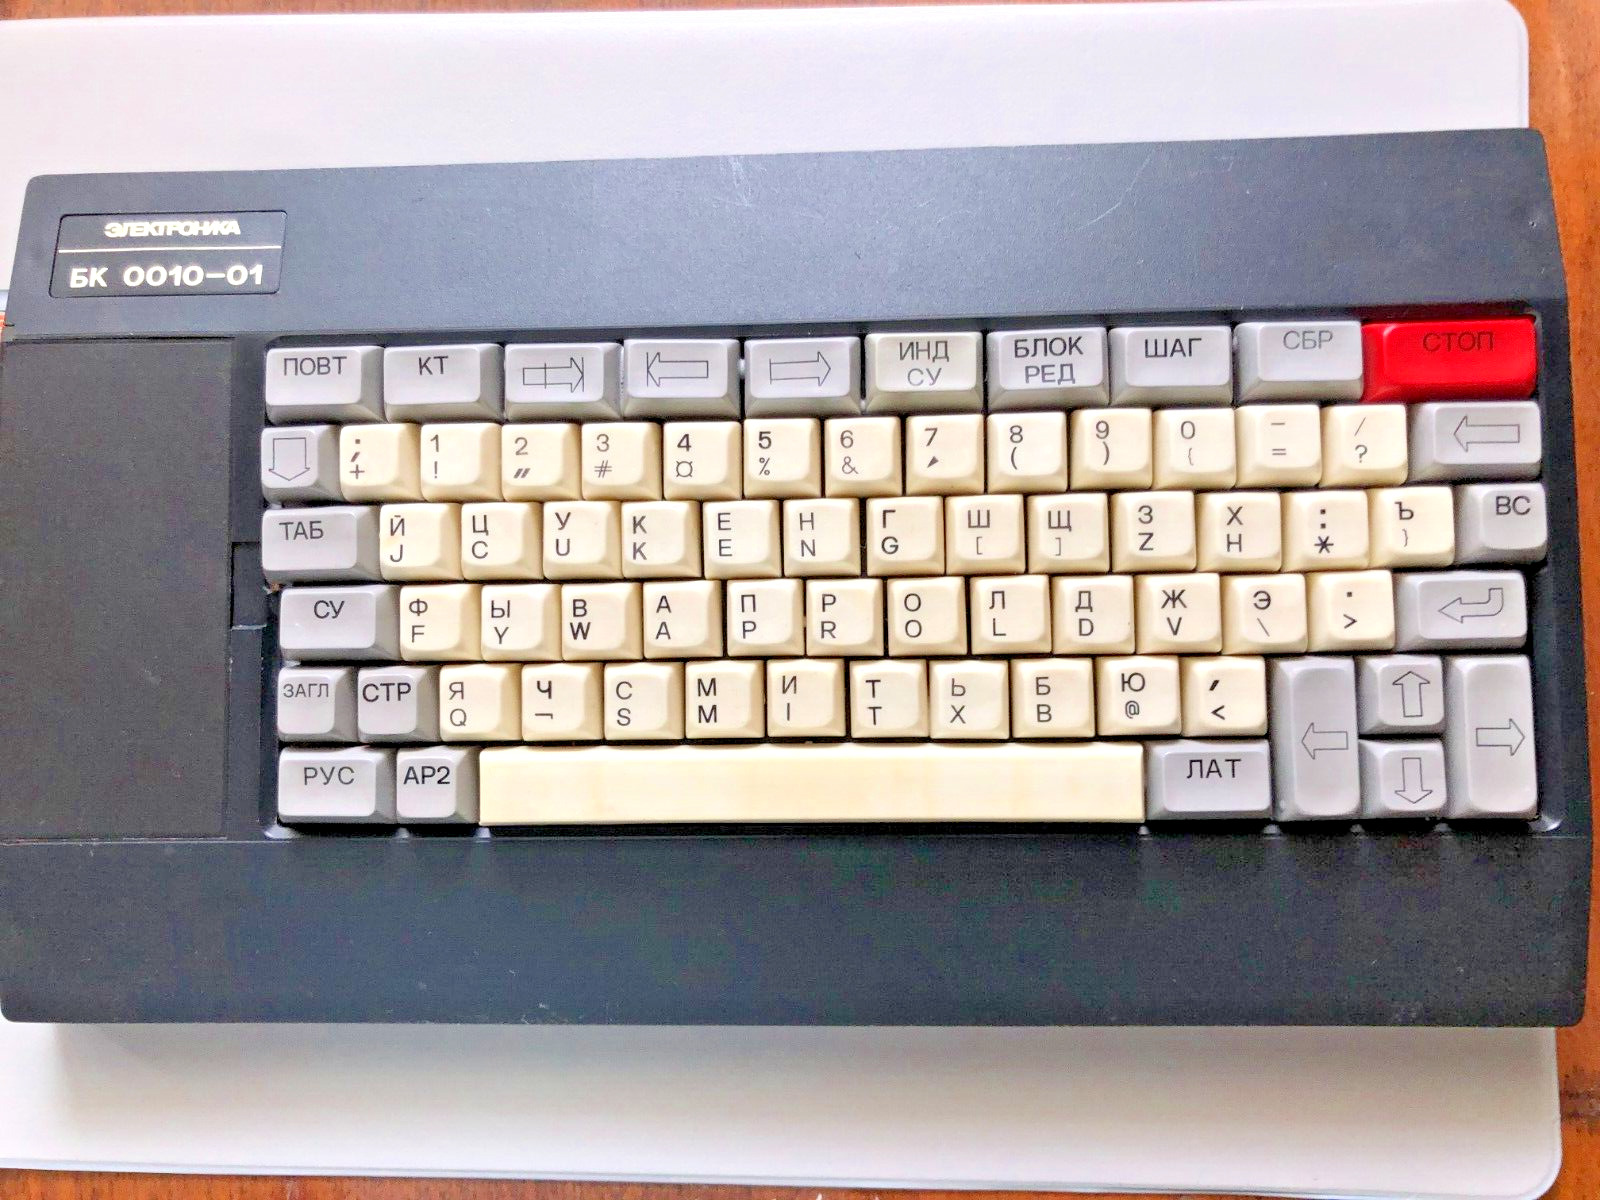 Keyboard , Parts, Elektronika BK 0010 01 USSR computer